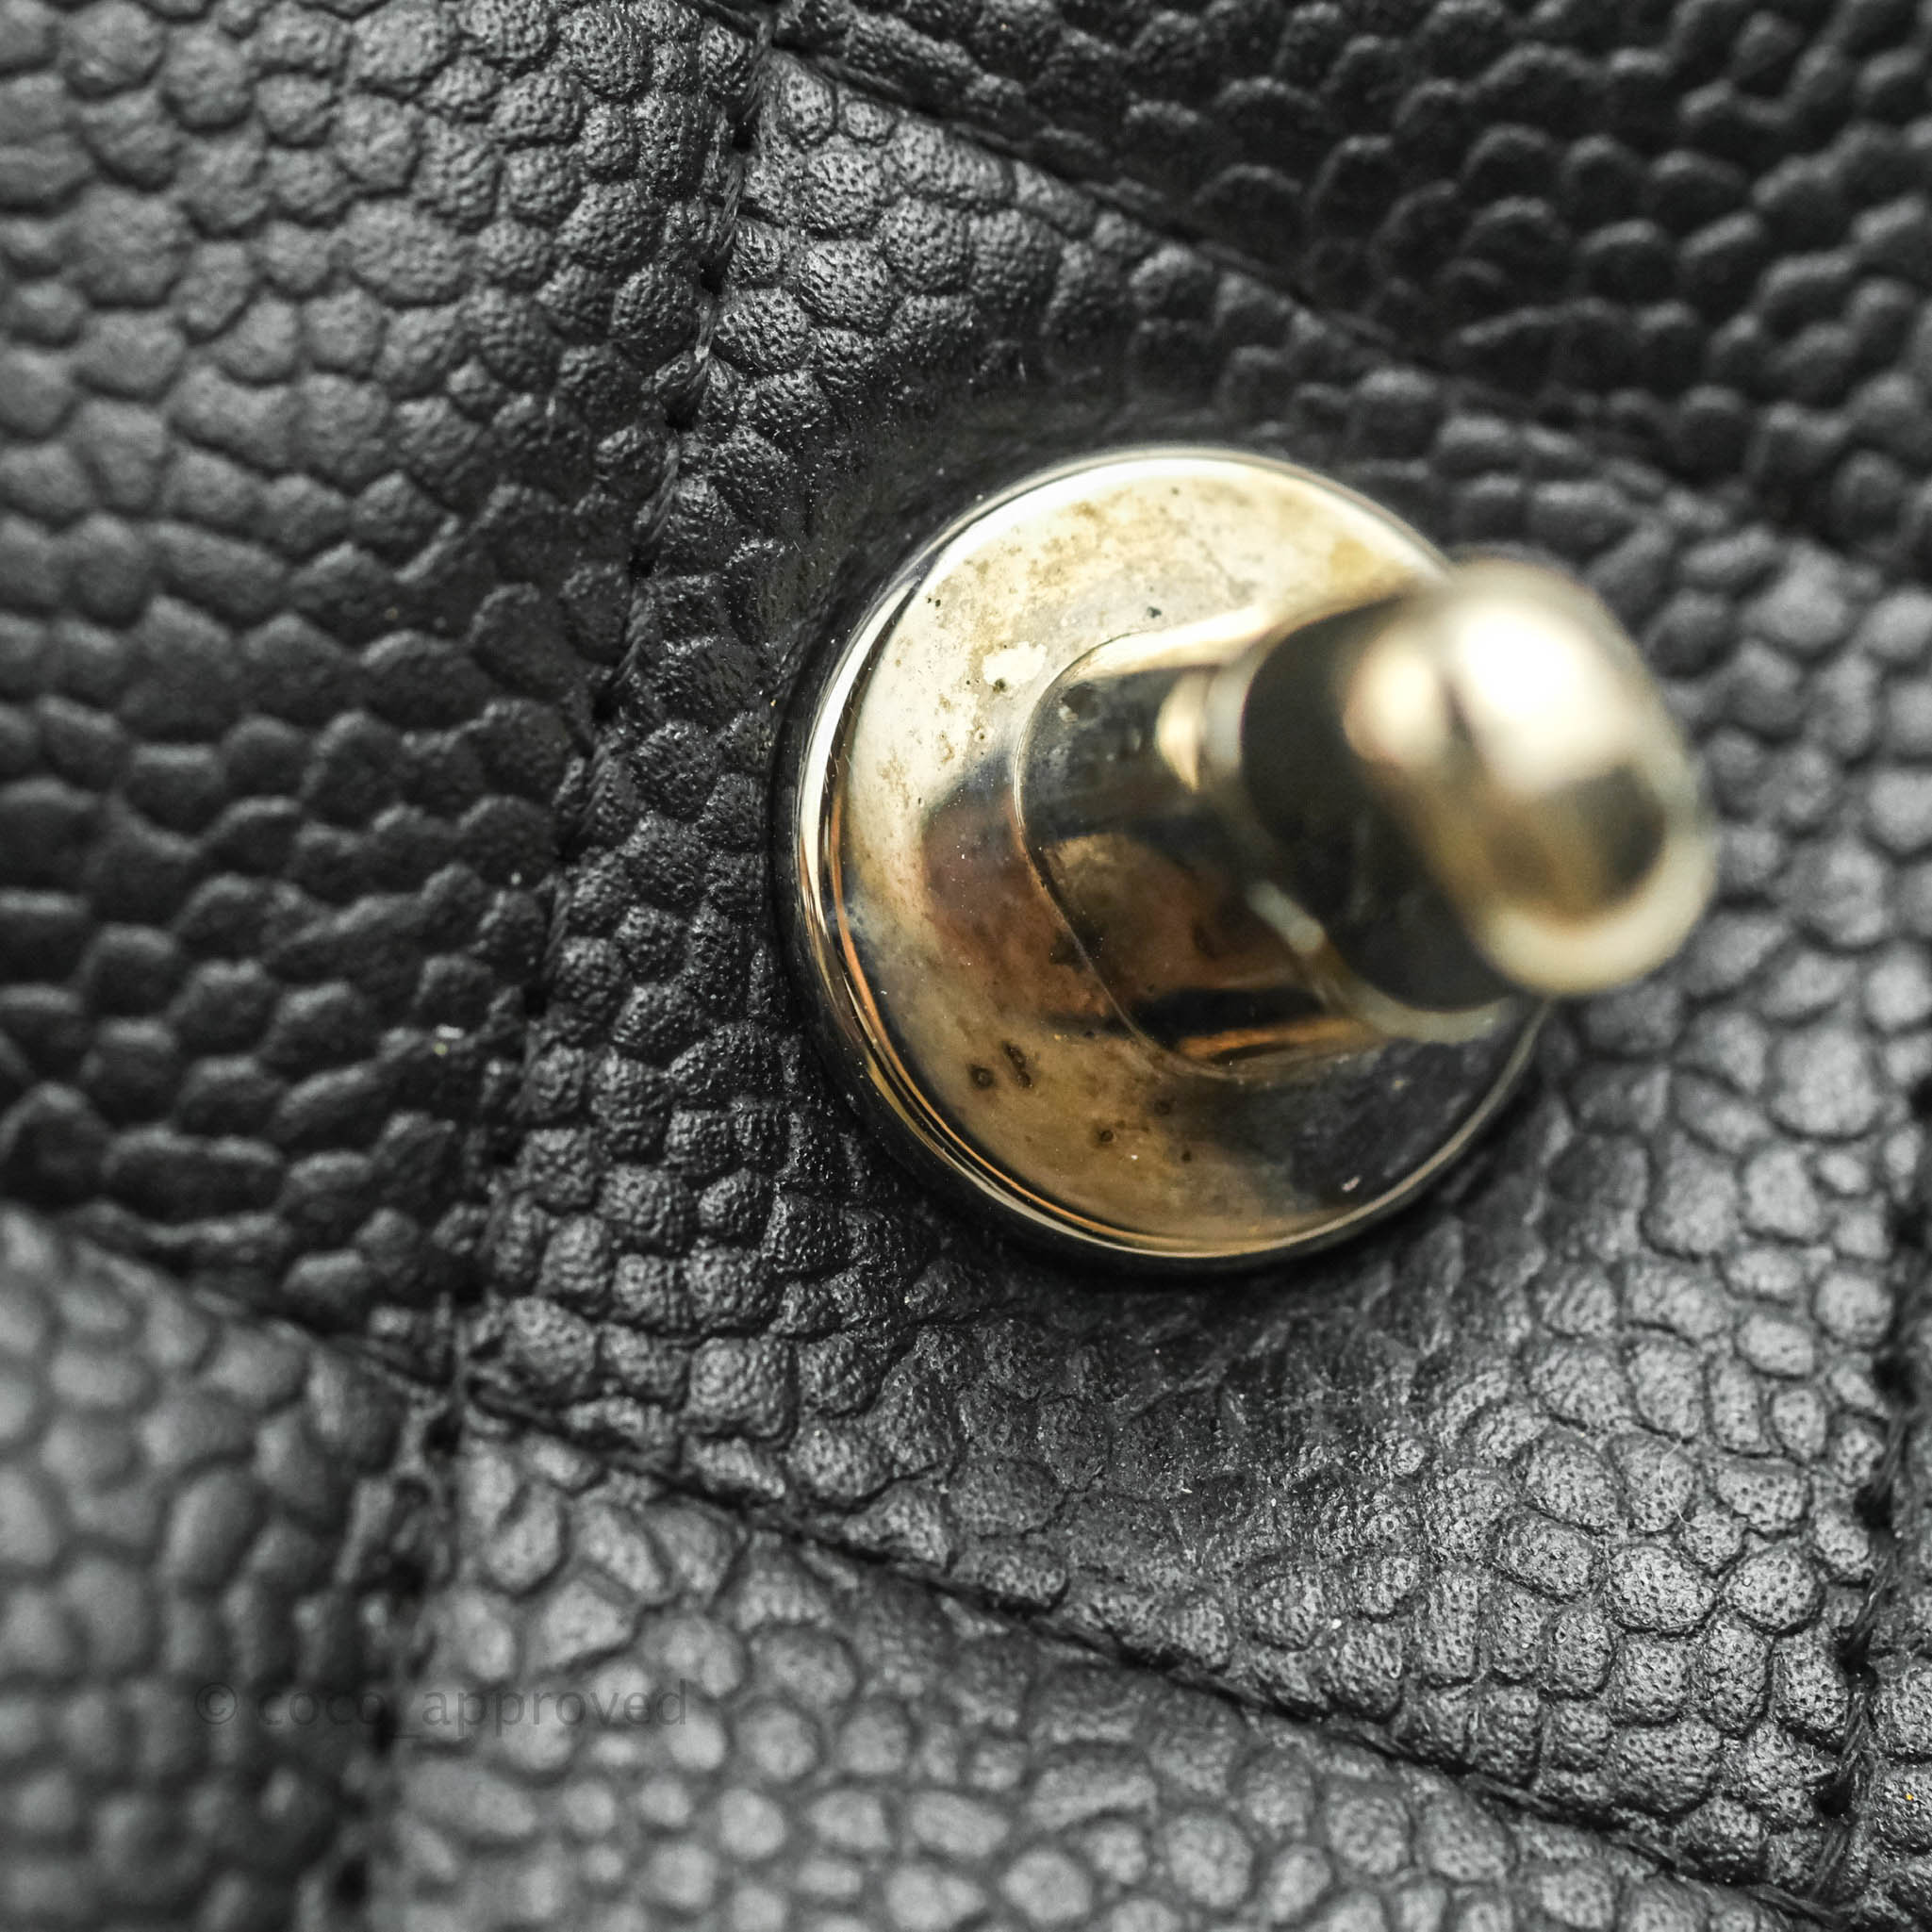 Authentic Chanel Black Quilted Caviar Leather Jumbo Single Flap Bag – Paris  Station Shop